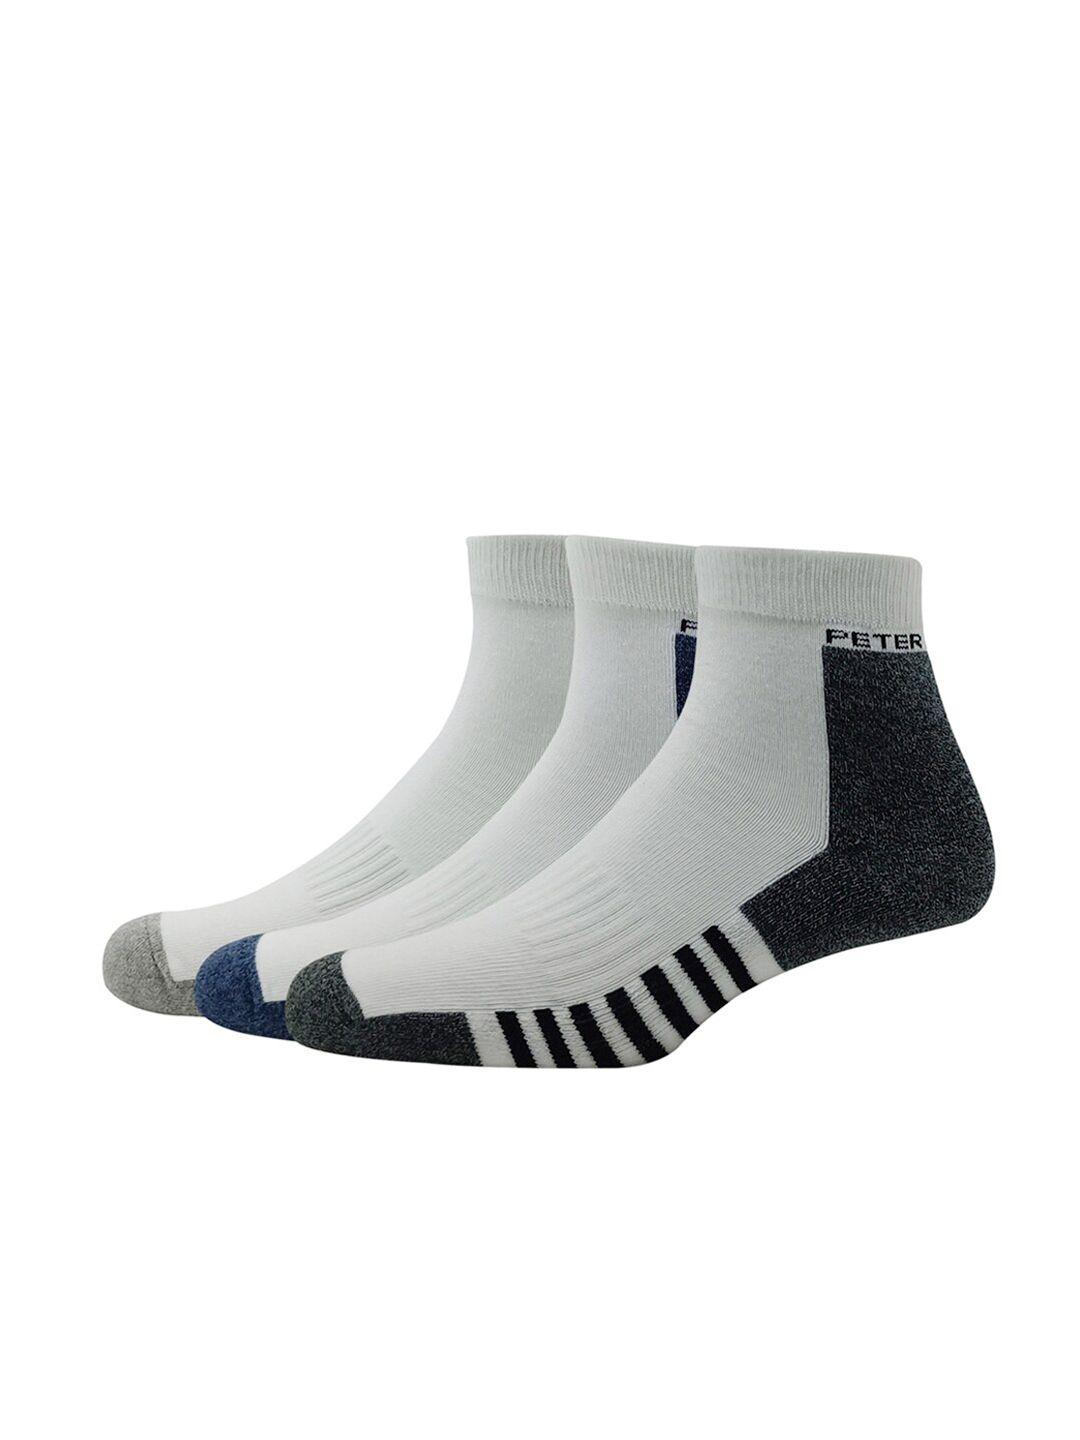 peter england pack of 3 colourblocked quarter-length socks